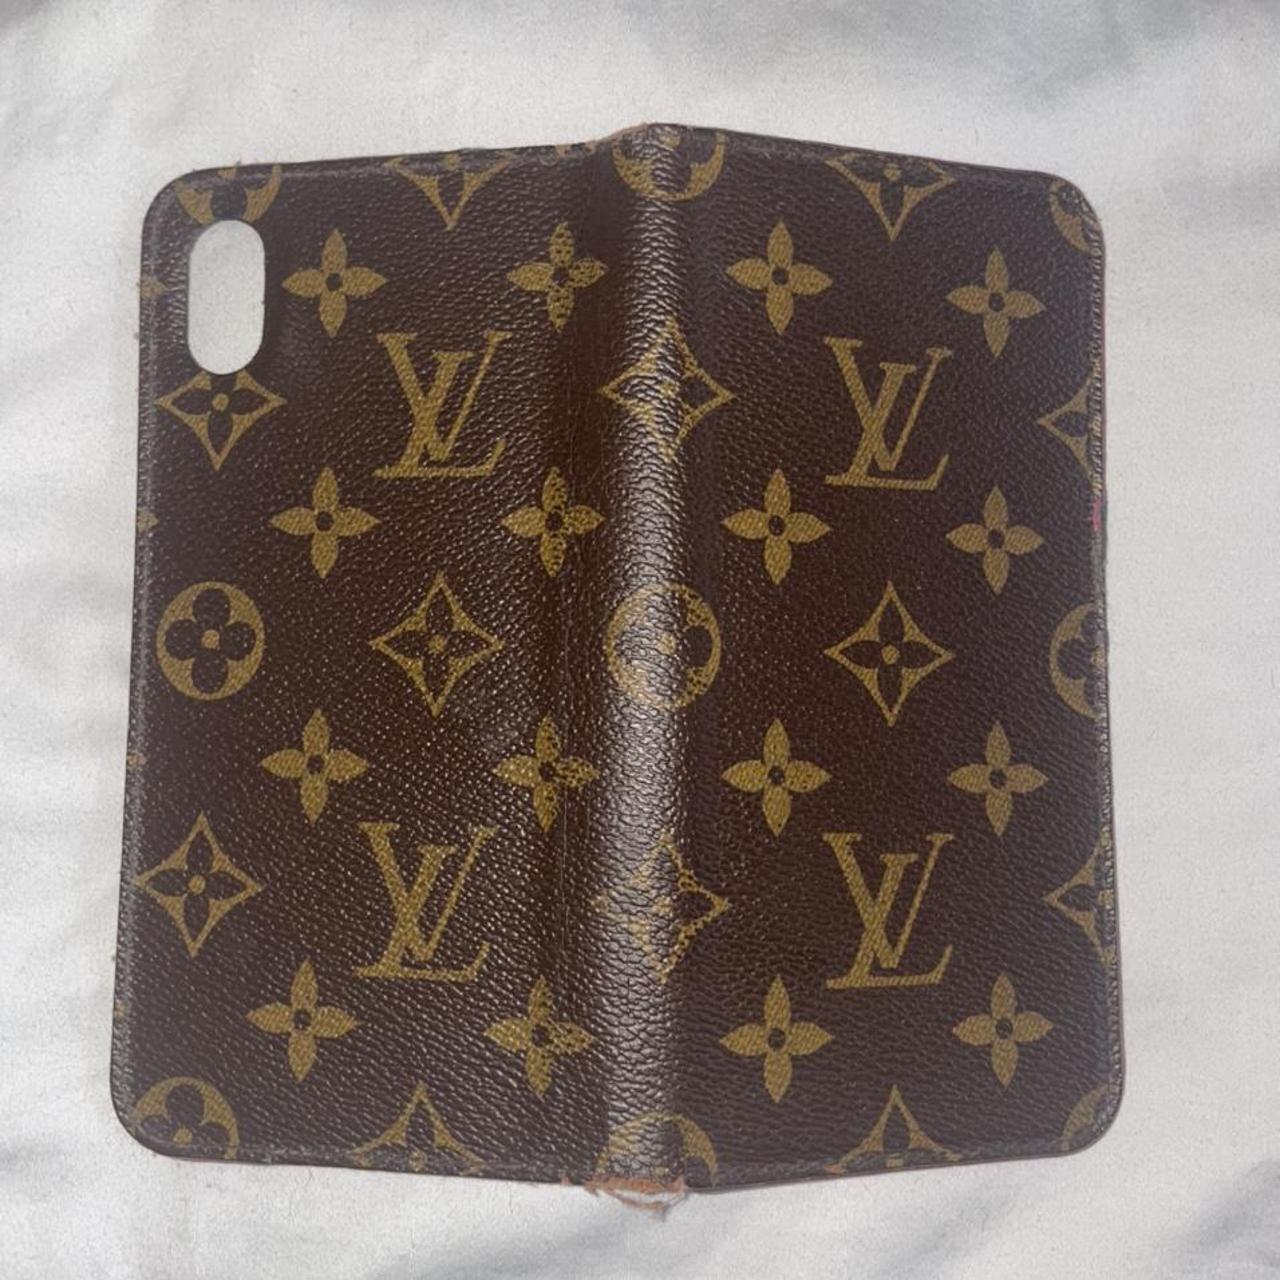 Phone case Iphone X Louis Vuitton